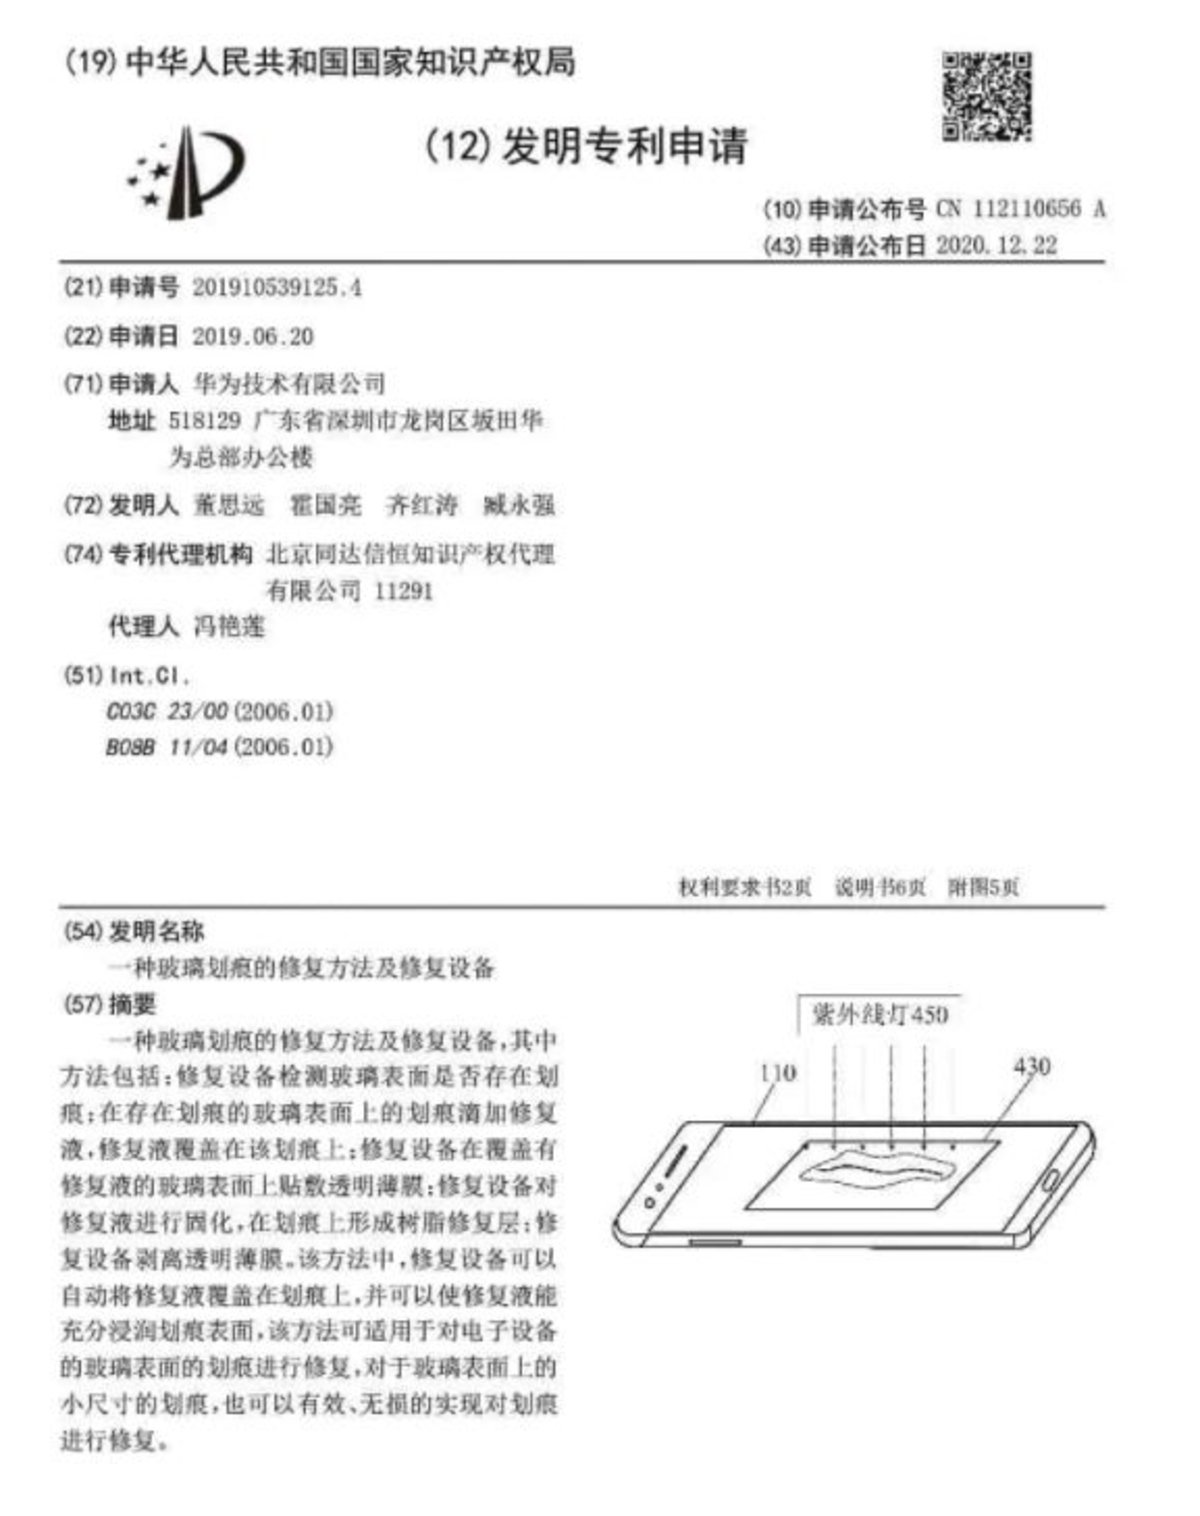 patente huawei